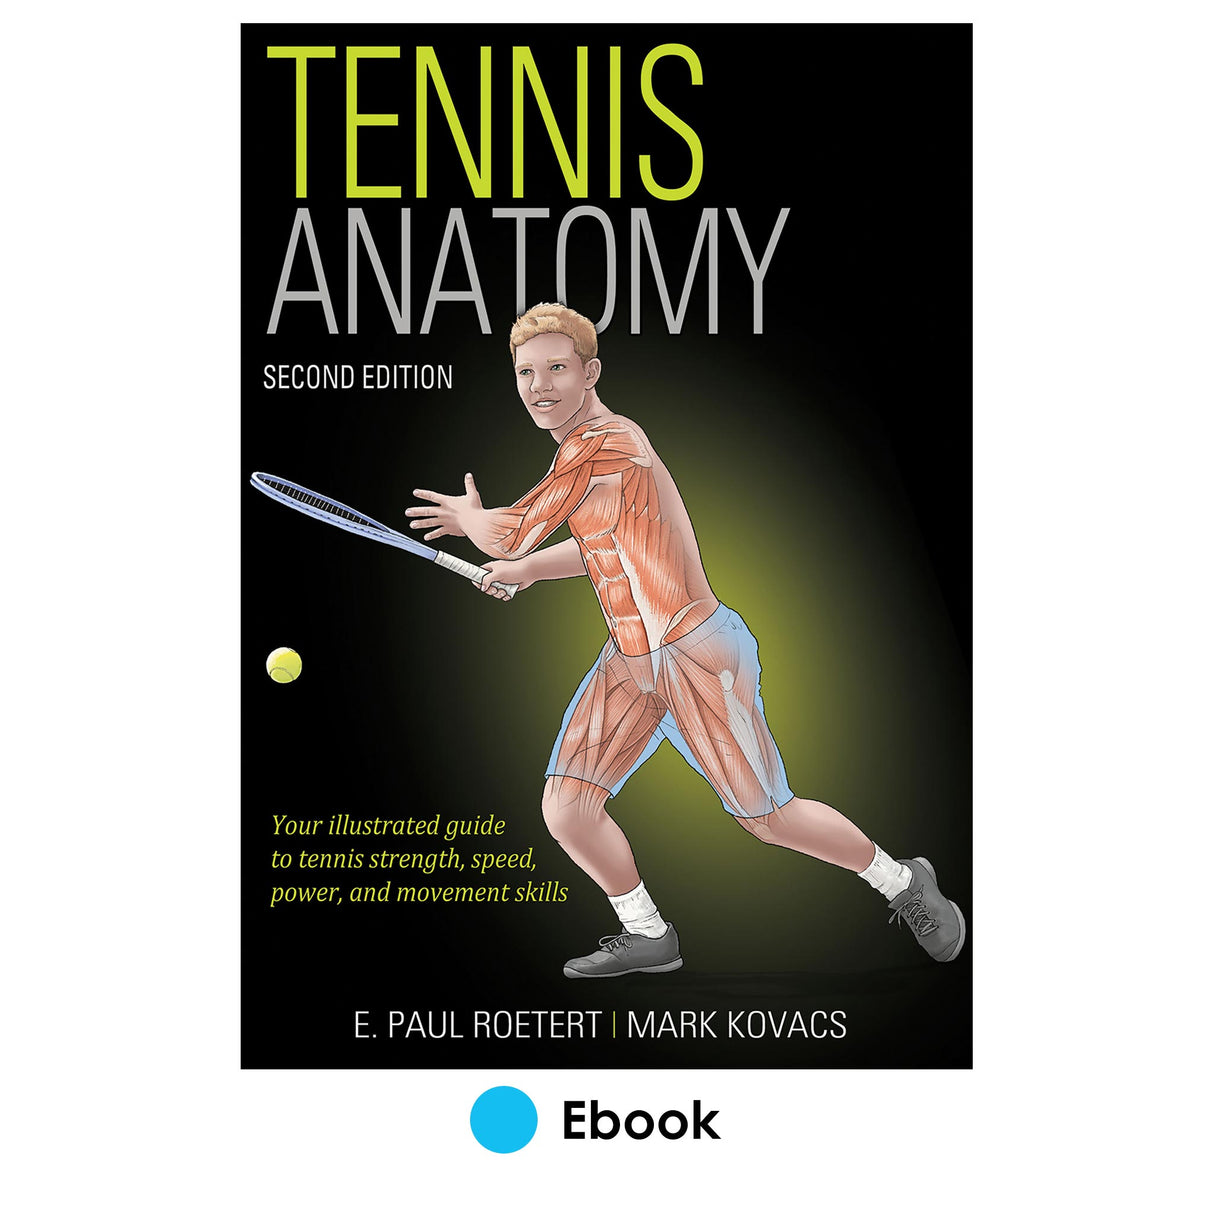 Tennis Anatomy 2nd Edition epub